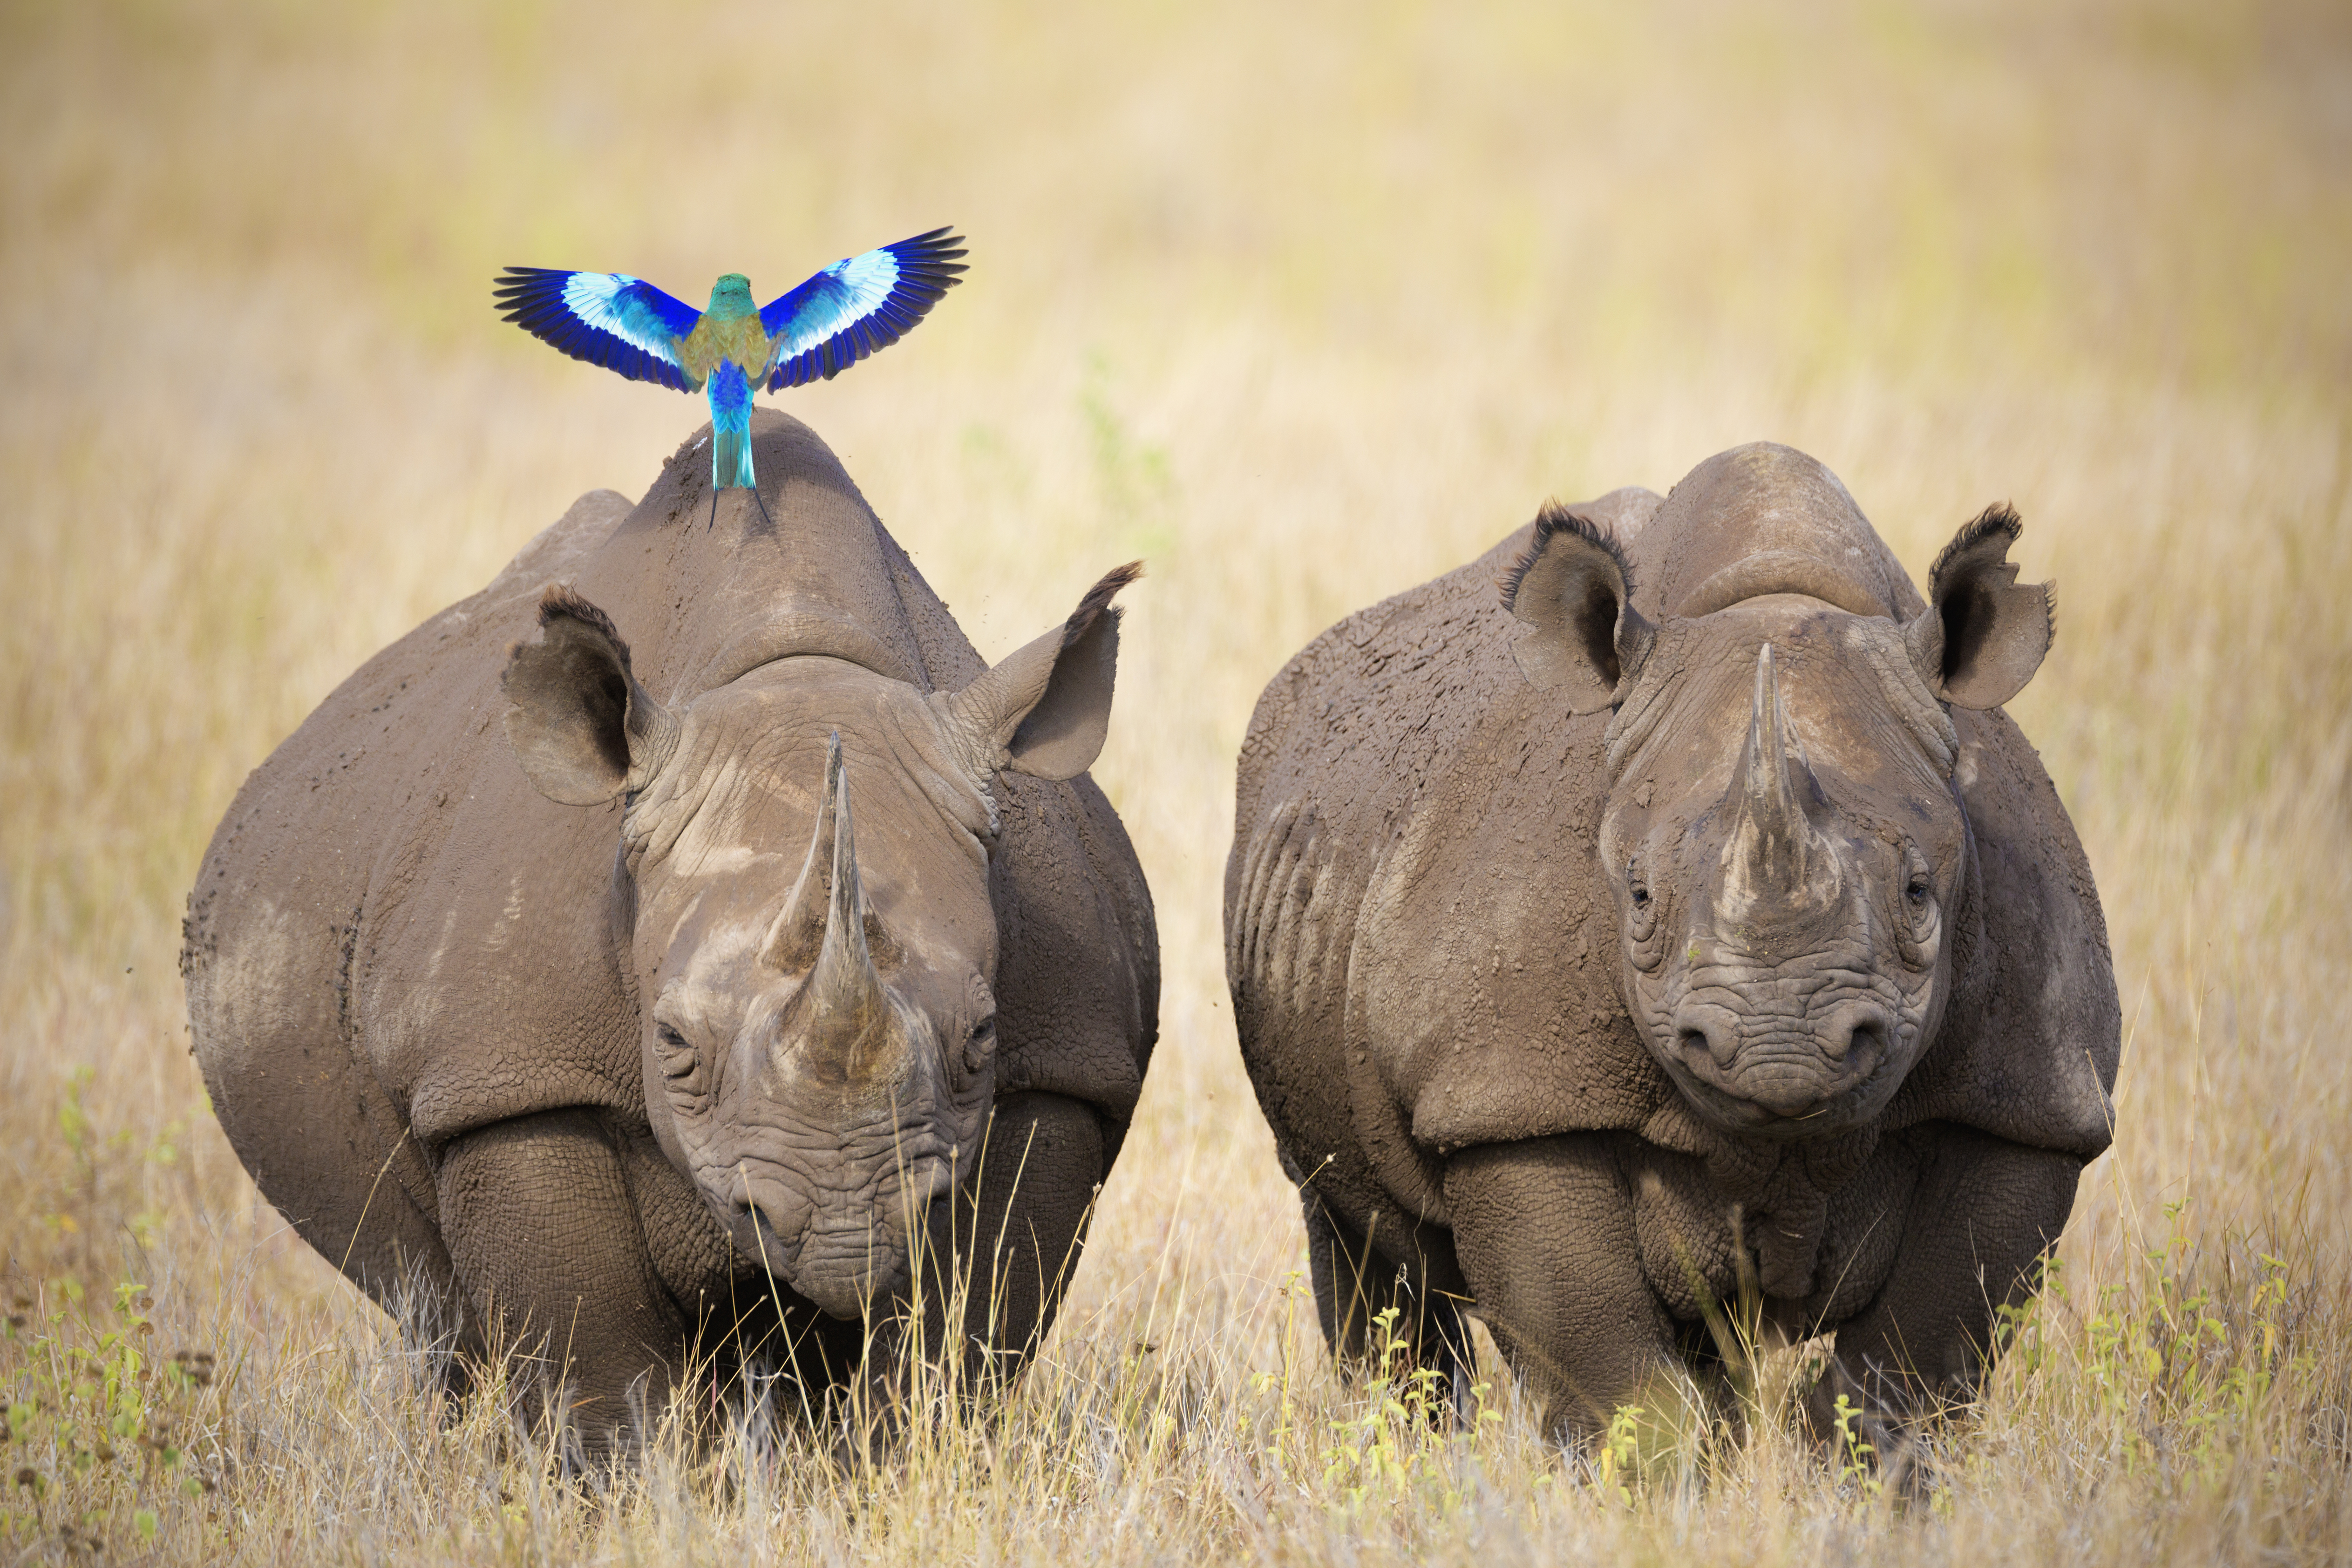 black rhinoceros location